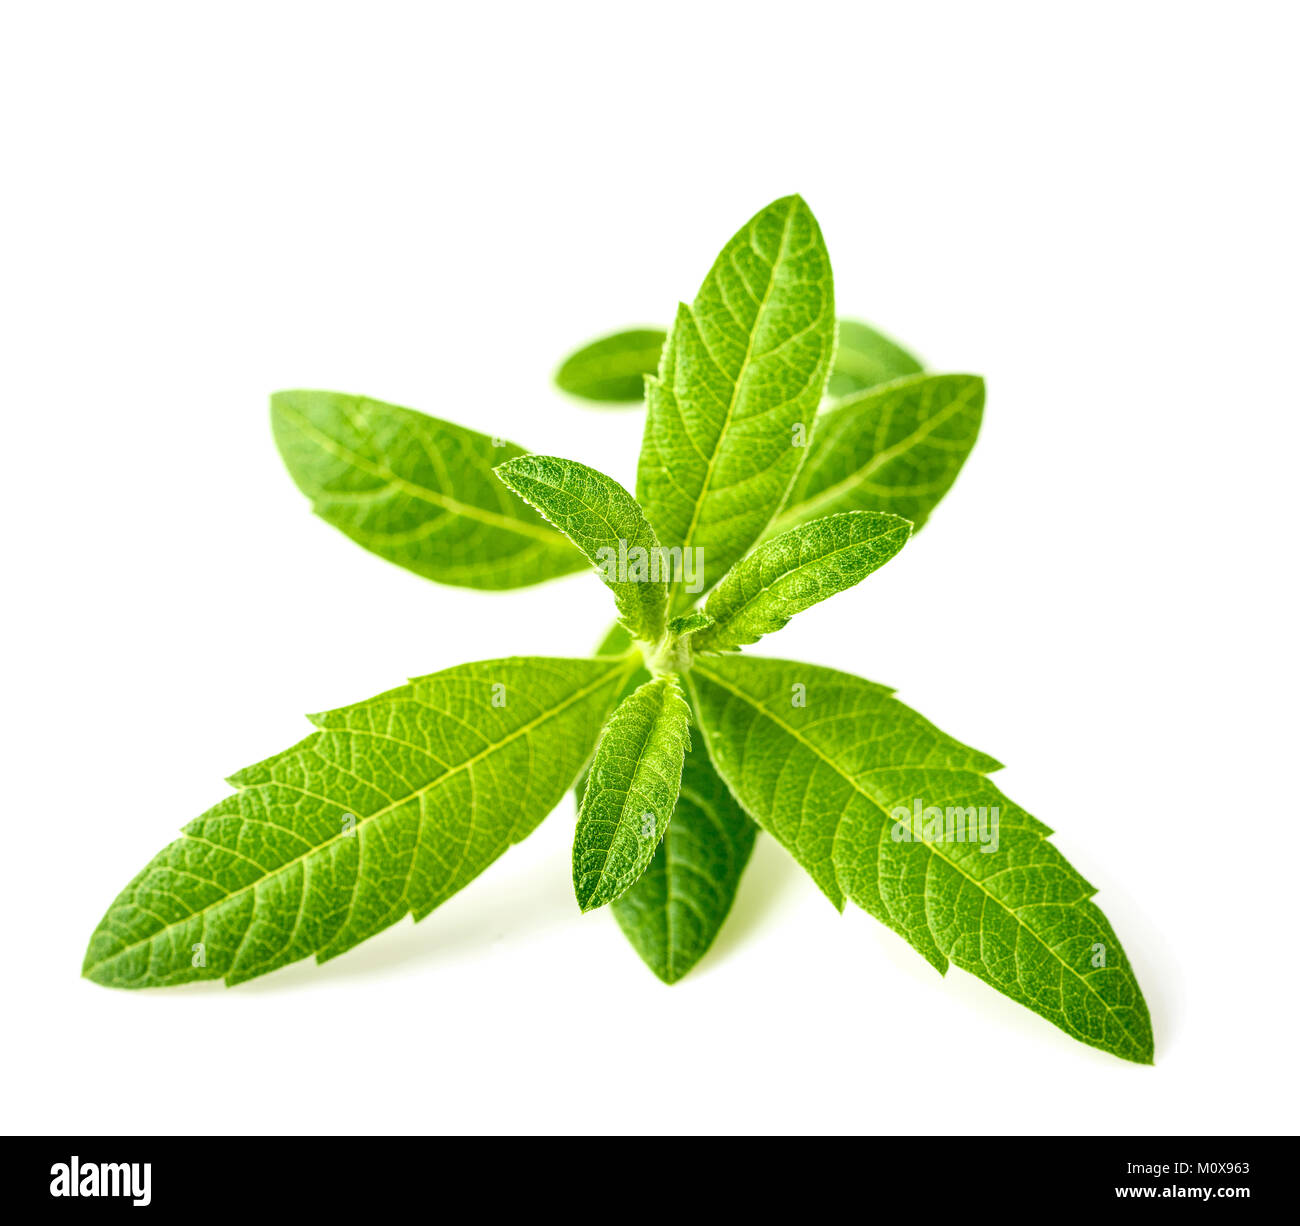 fresh lippia leaves on the white background Stock Photo - Alamy